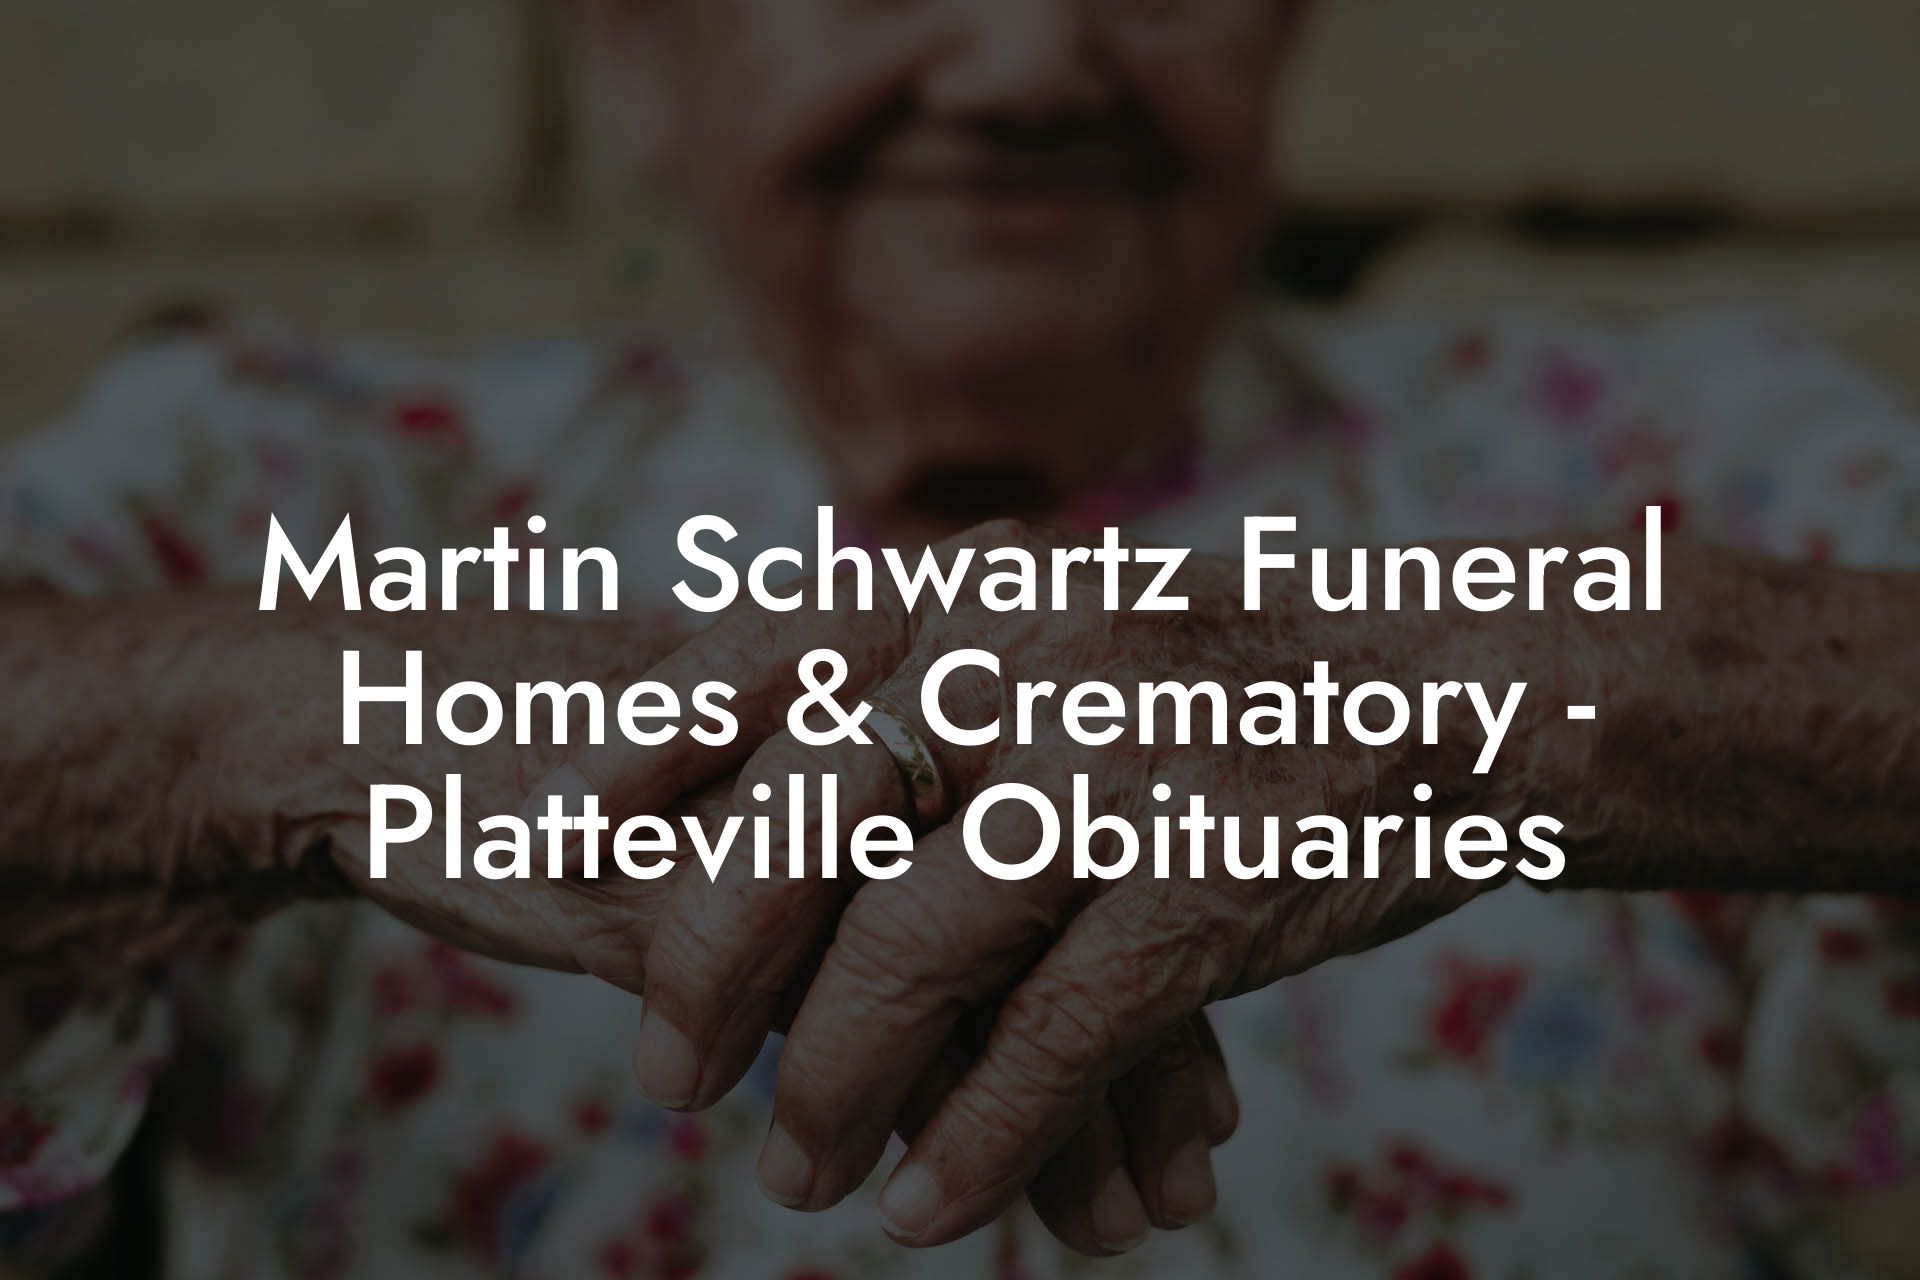 Martin Schwartz Funeral Homes & Crematory - Platteville Obituaries